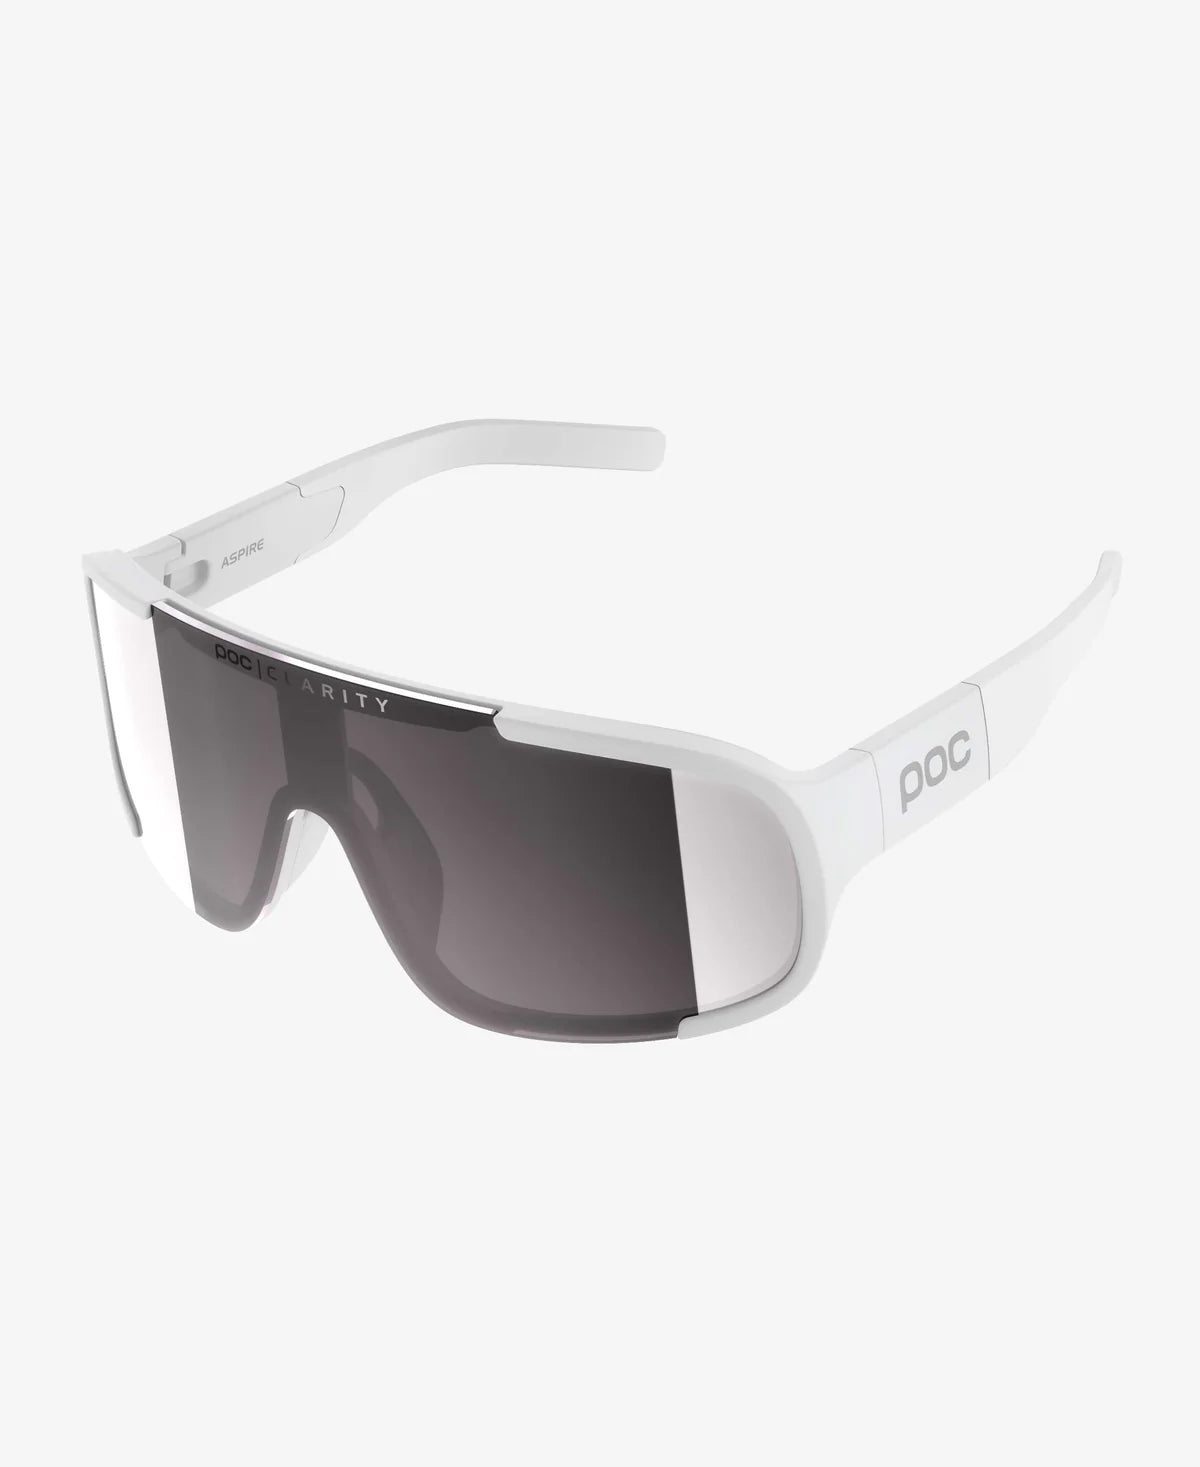 White/gray Aspire performance sunglasses